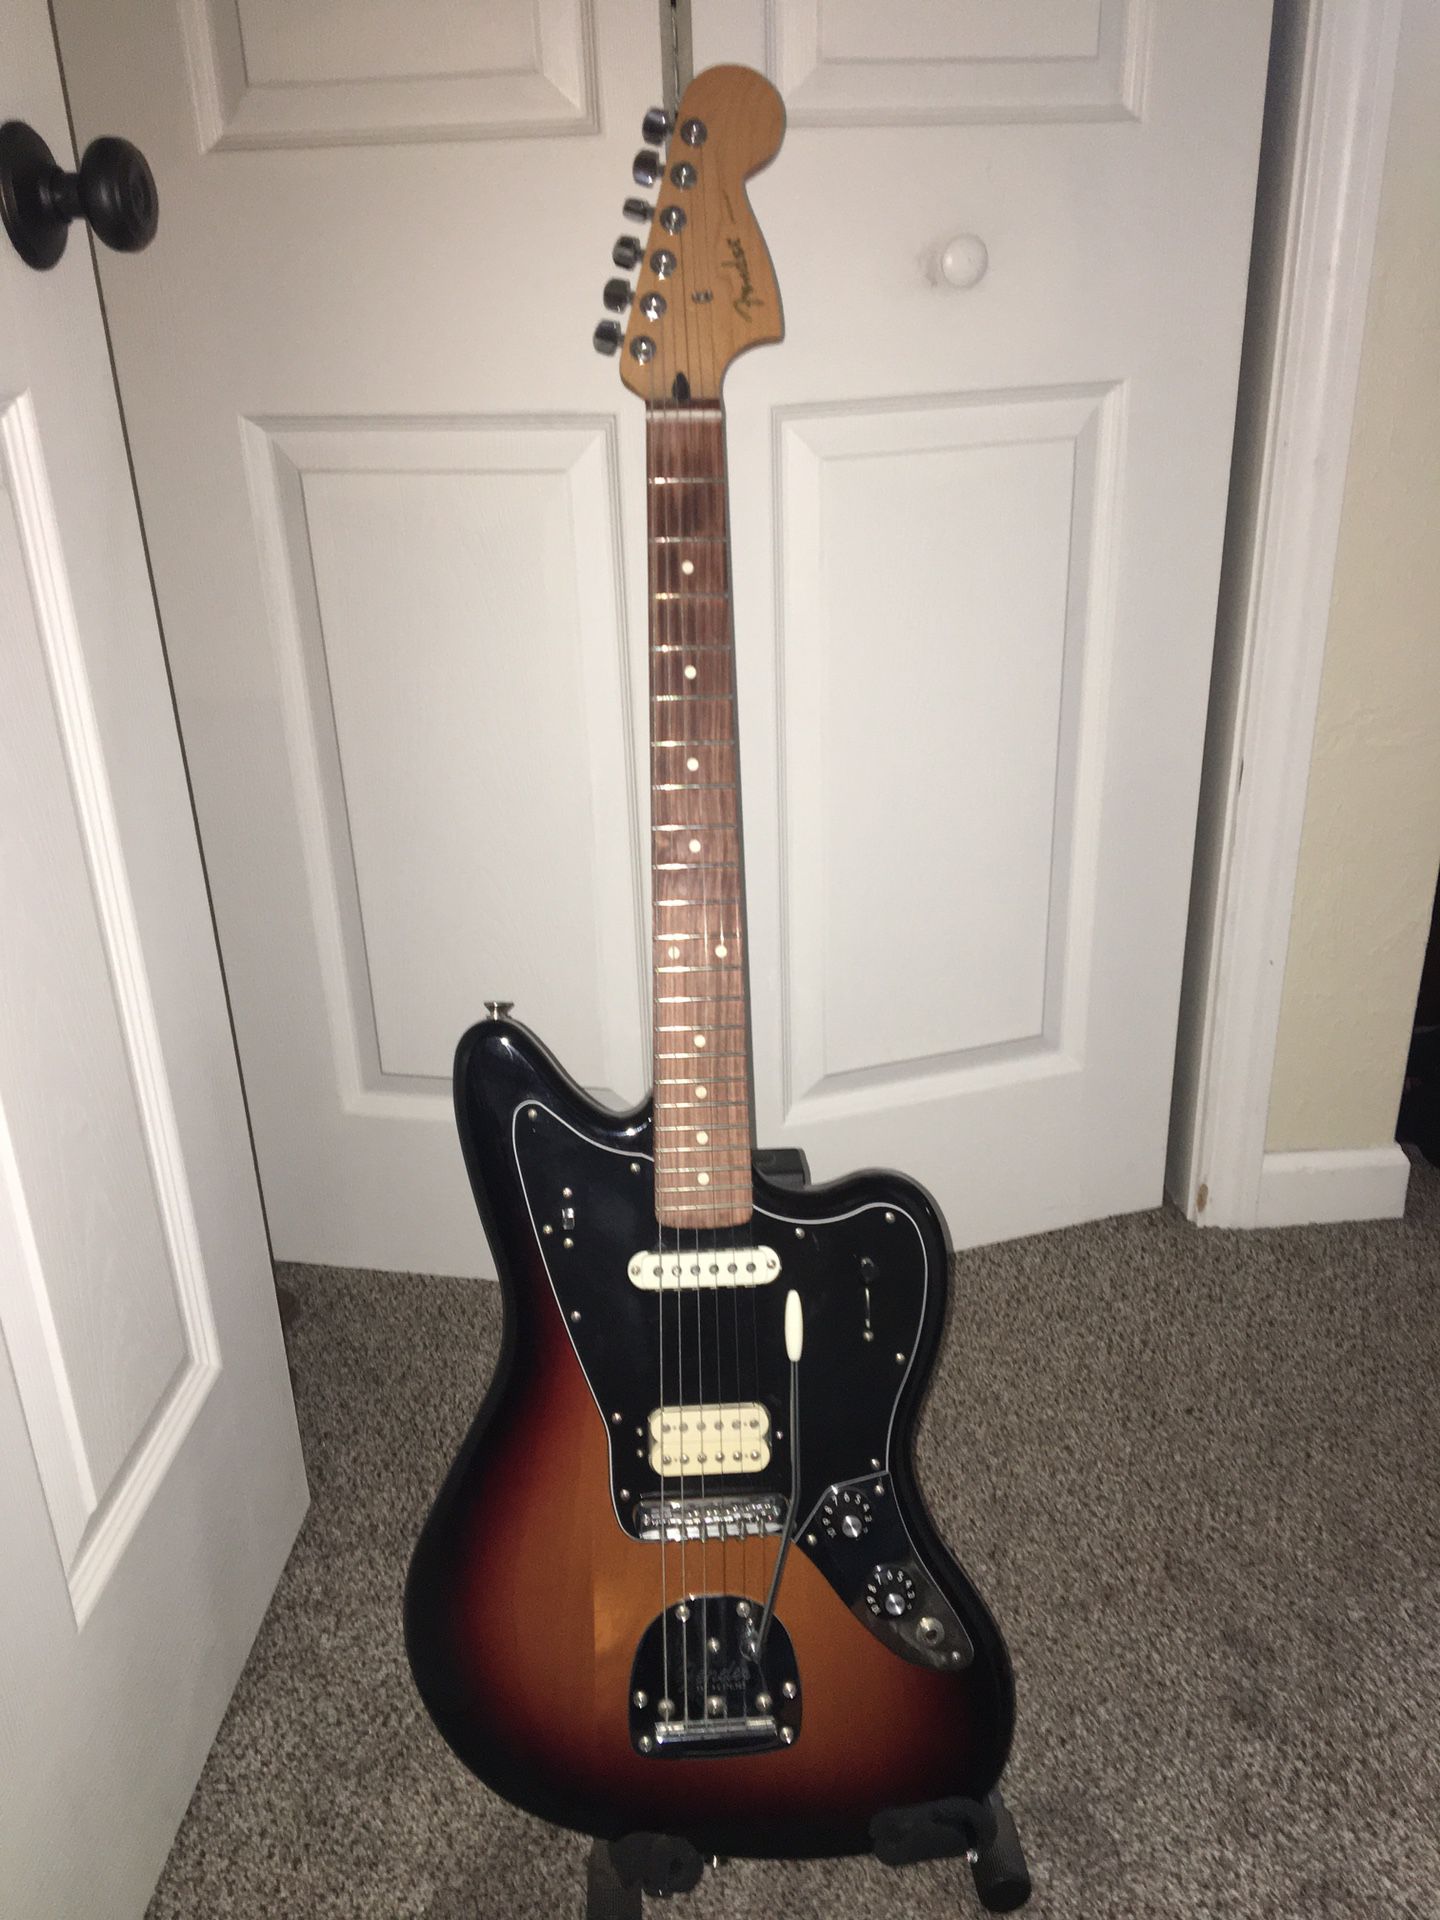 Fender Jaguar Guitar 2018 Sunburn Color